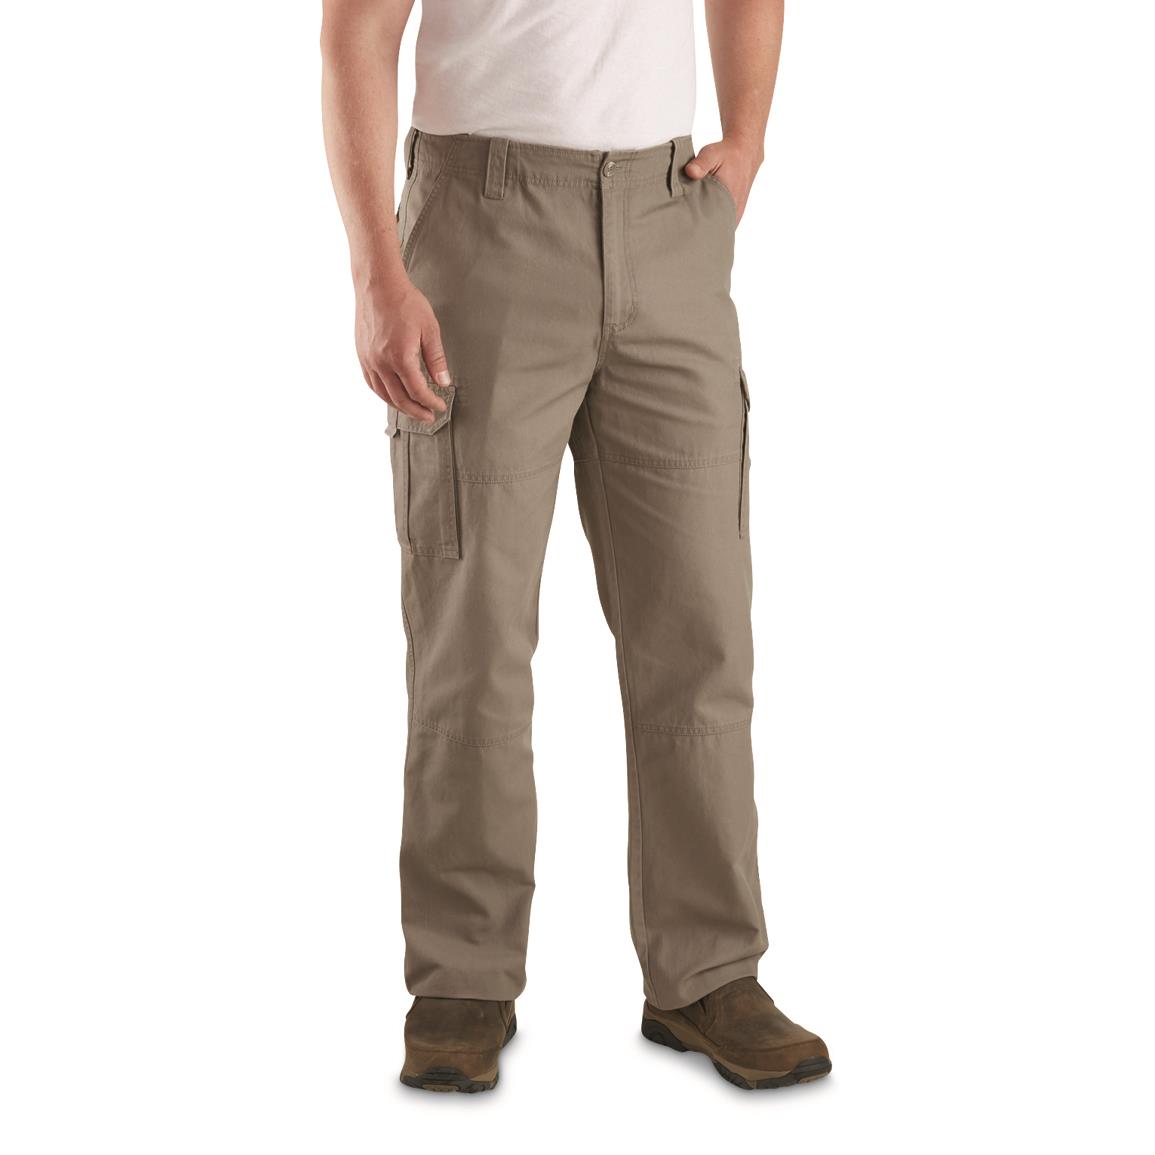 Guide Gear Men's Outdoor Cotton Cargo Pants, Driftwood